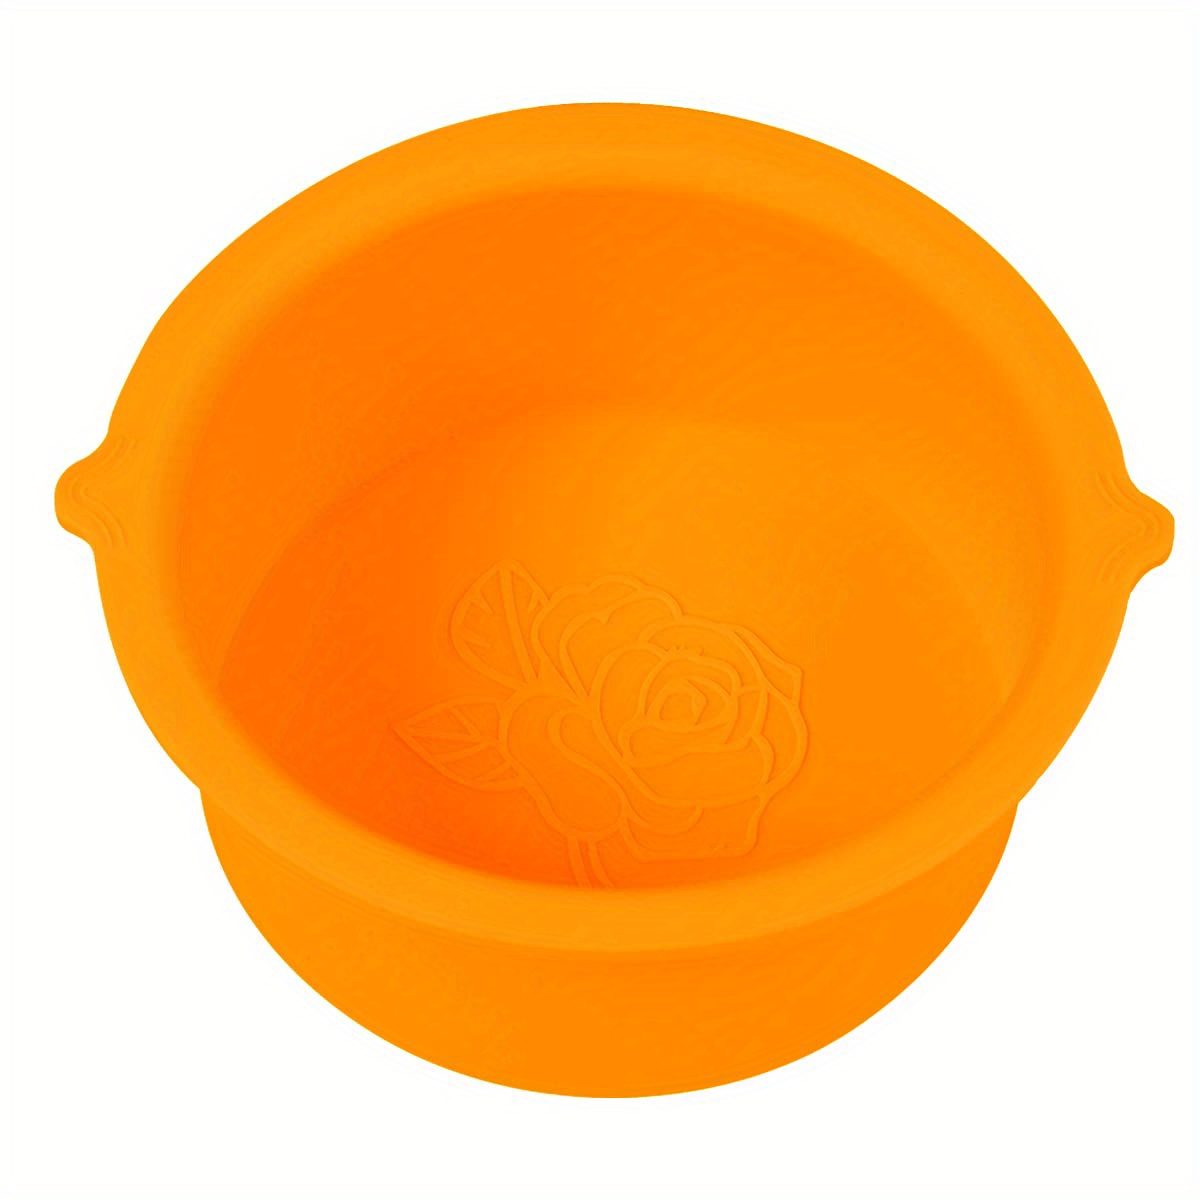 Silicone Wax Warmer Bowl Foldable Reusable Waxing Pot Liner - Temu